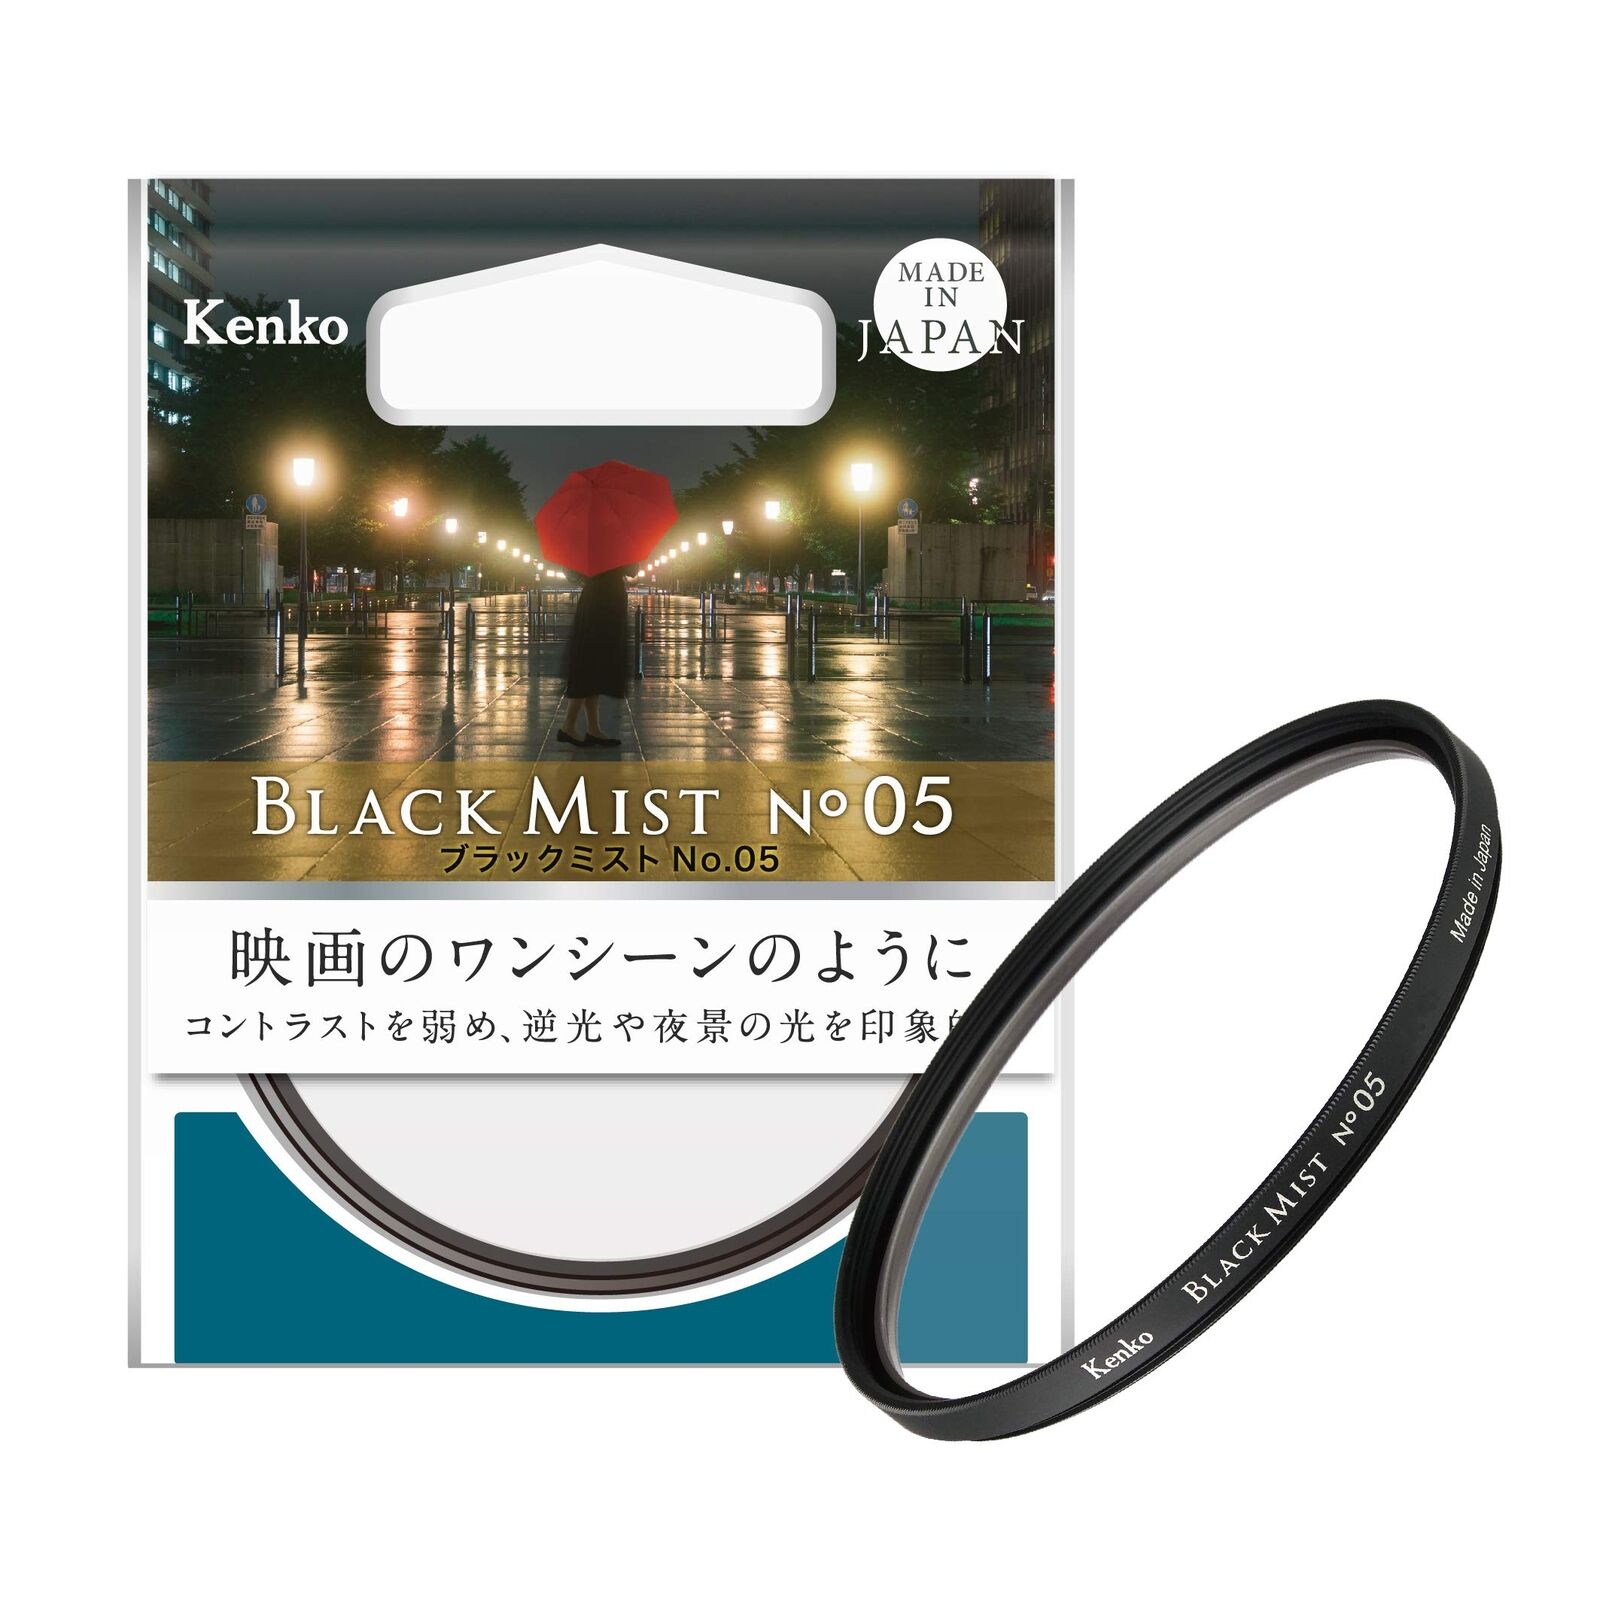 Kenko Lens Filter Black Mist No.05 Soft Effect 0.08Pound No.4